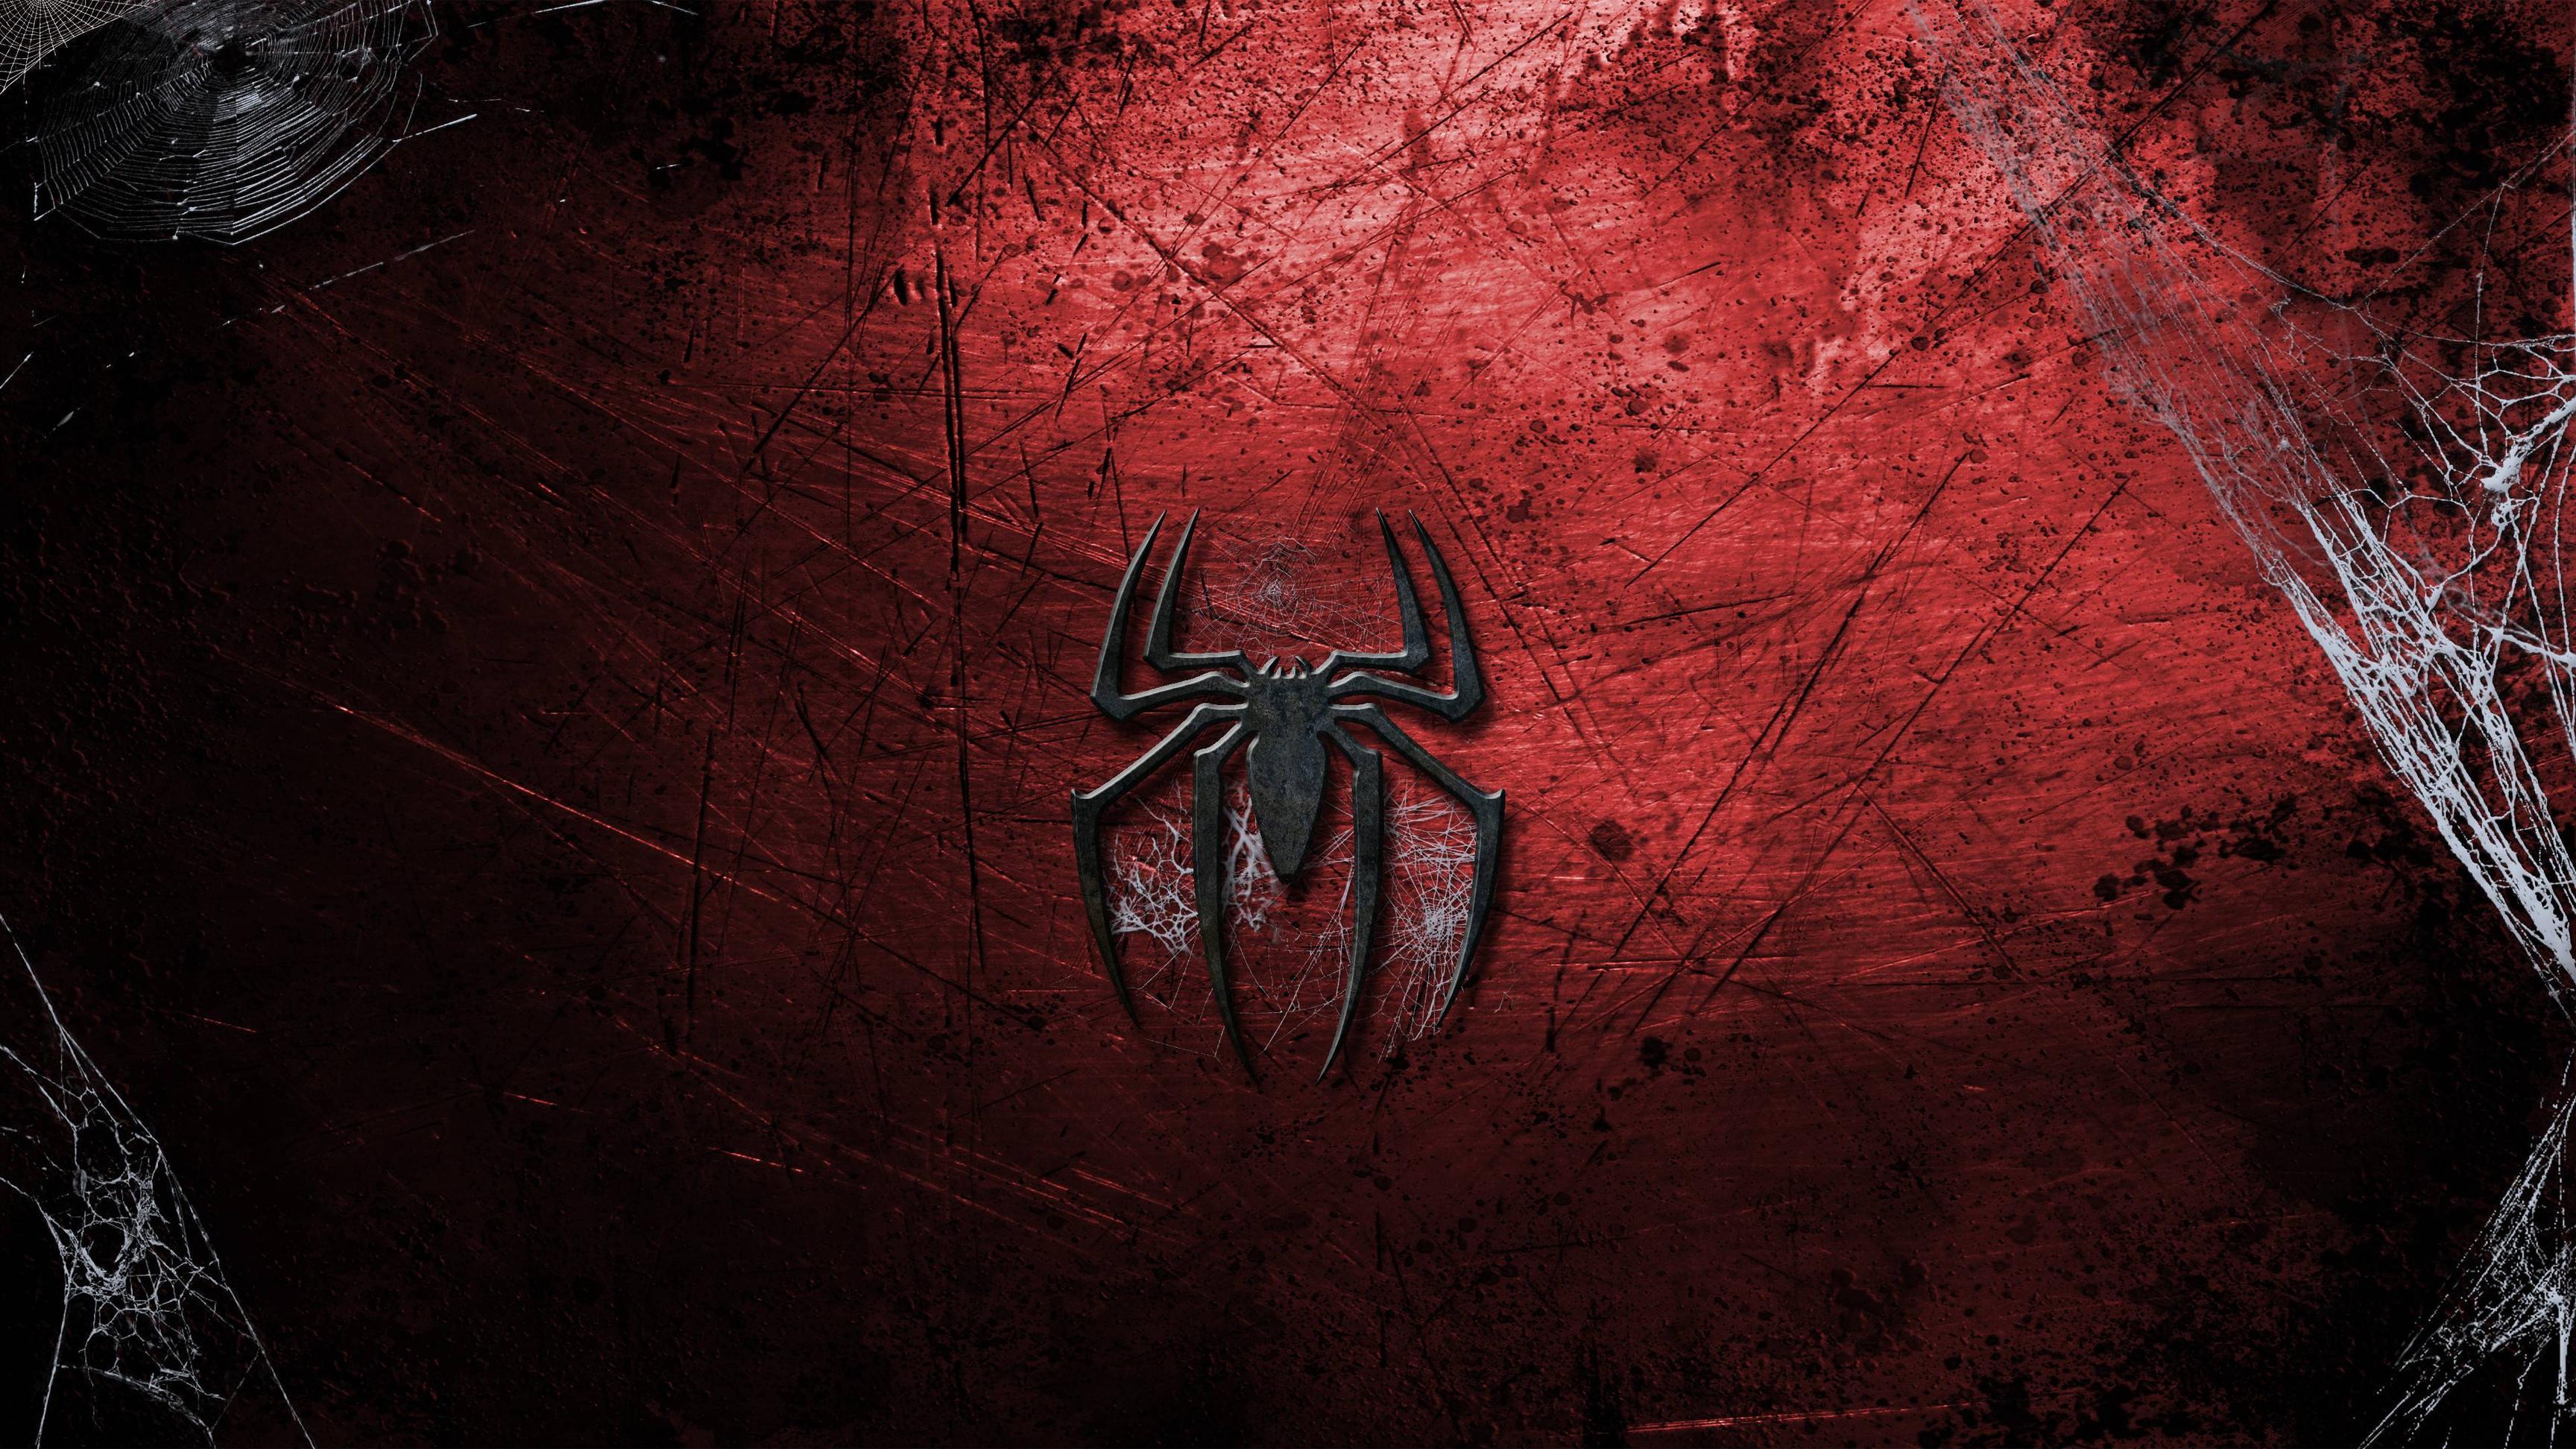 spiderman image download